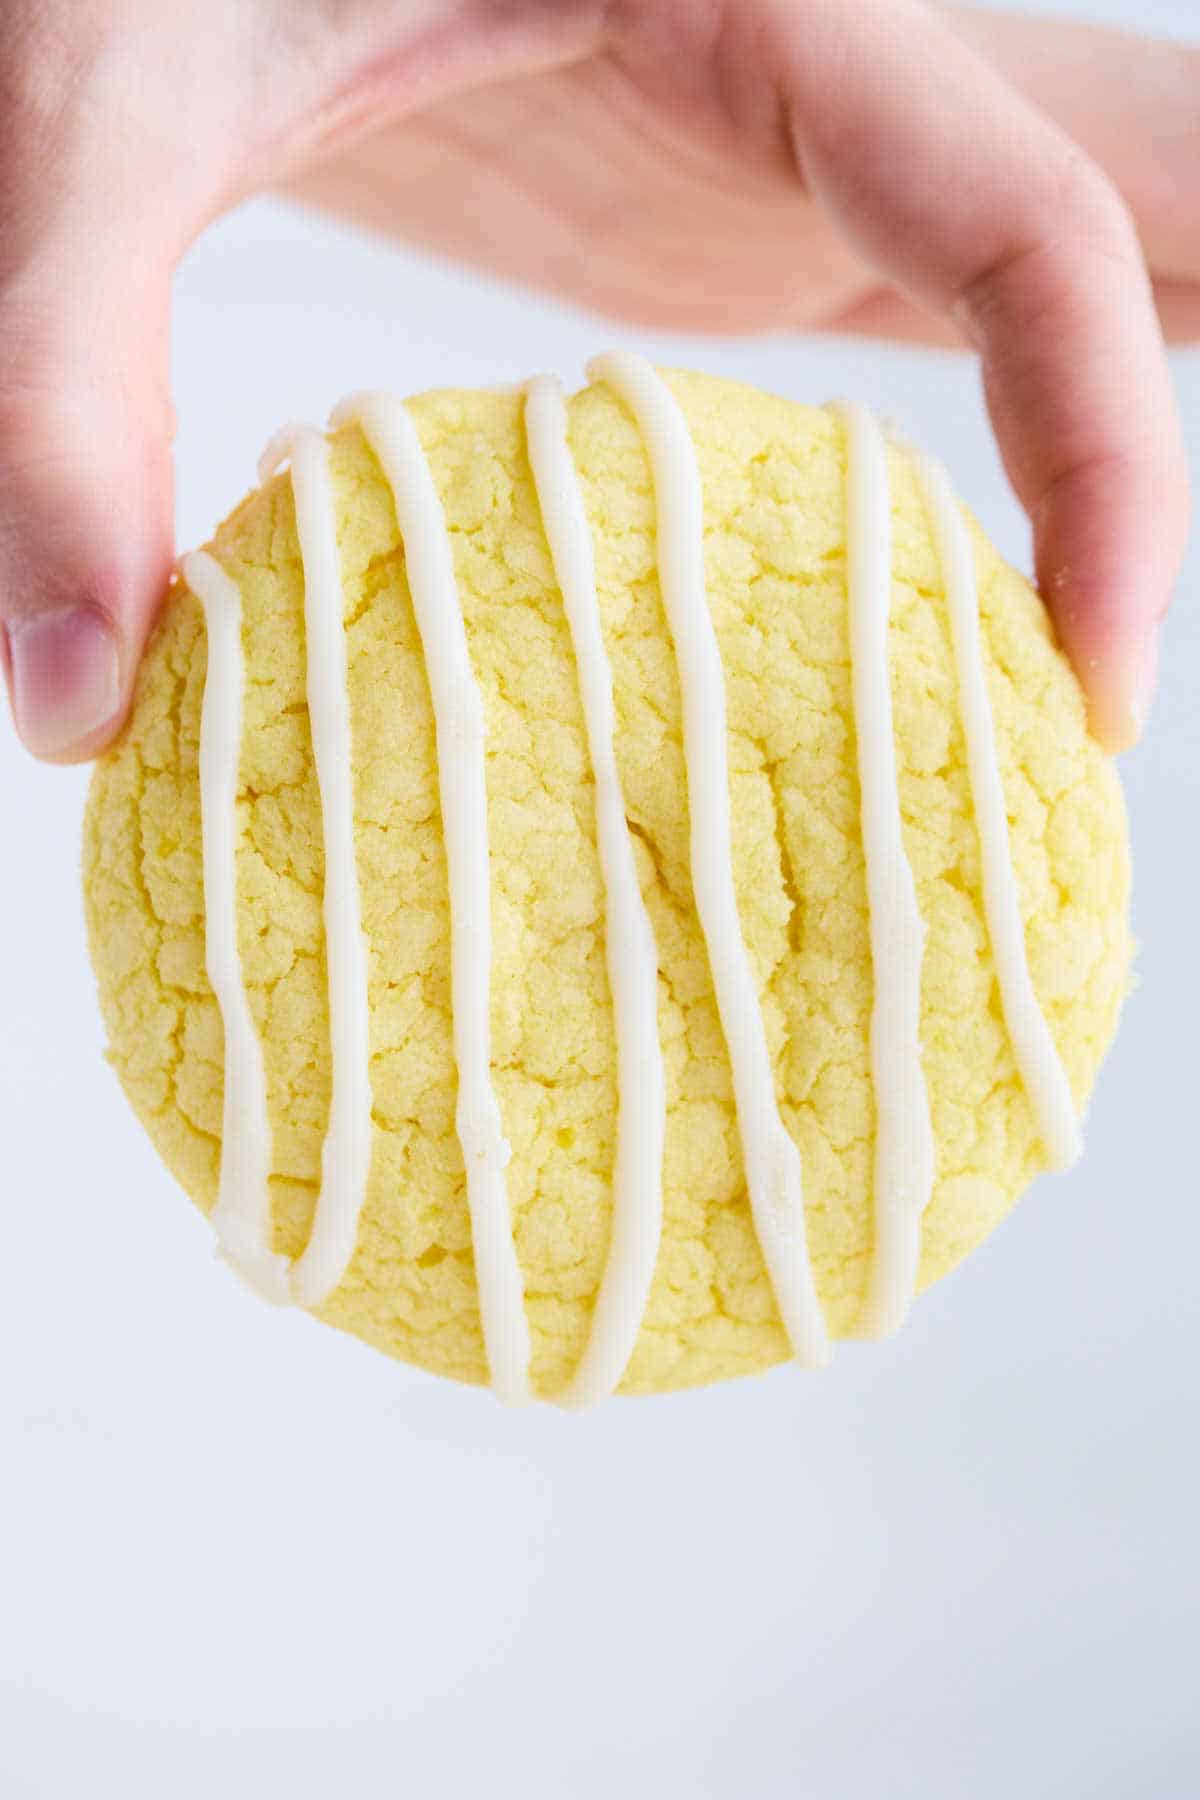 Fingers holding a single lemon cake mix cookie.